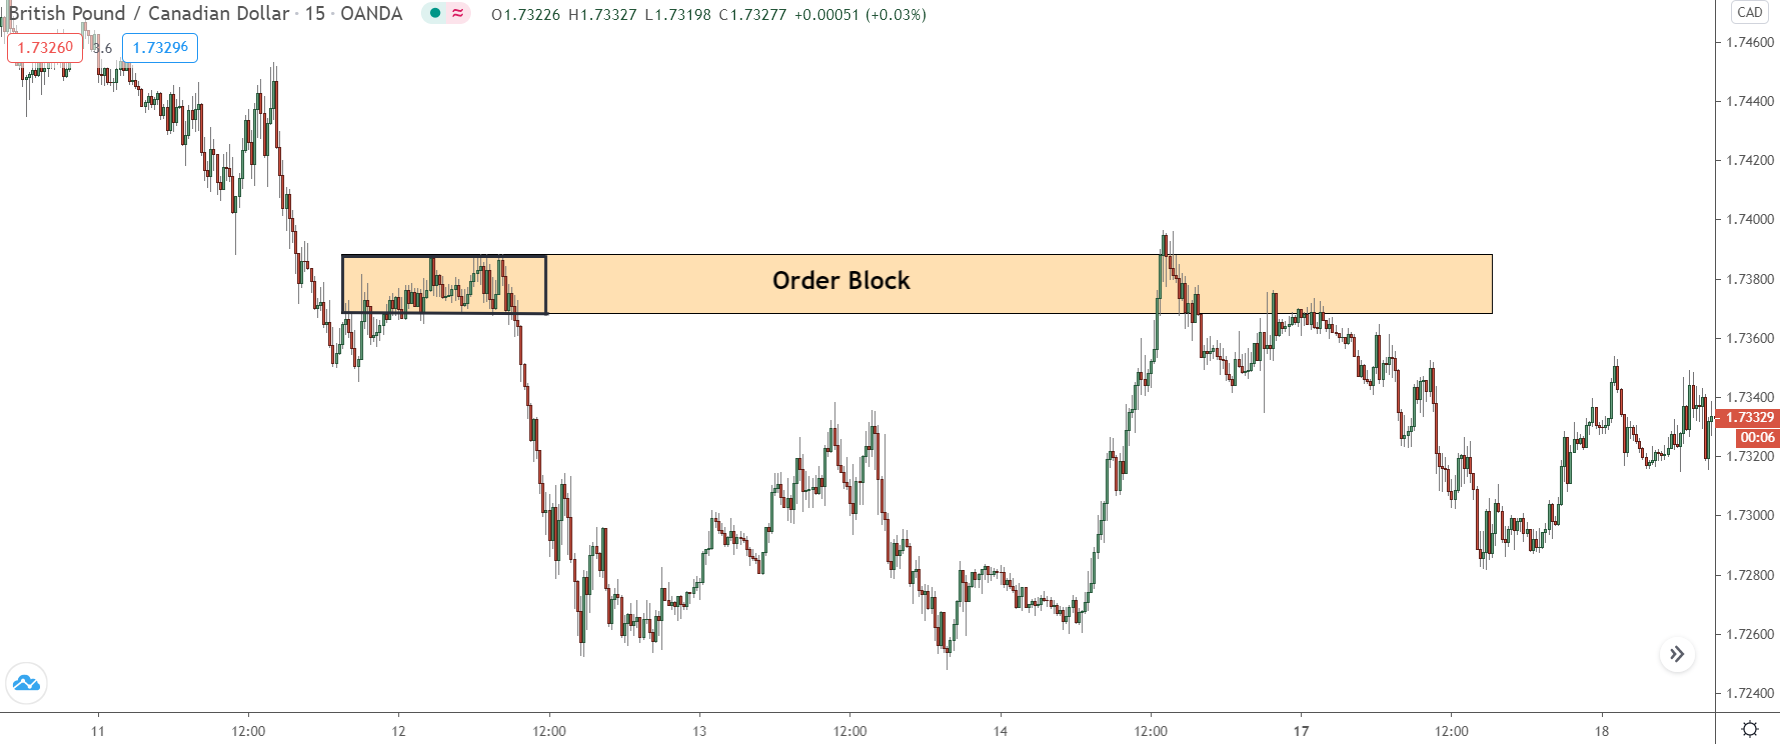 Trading order blocks